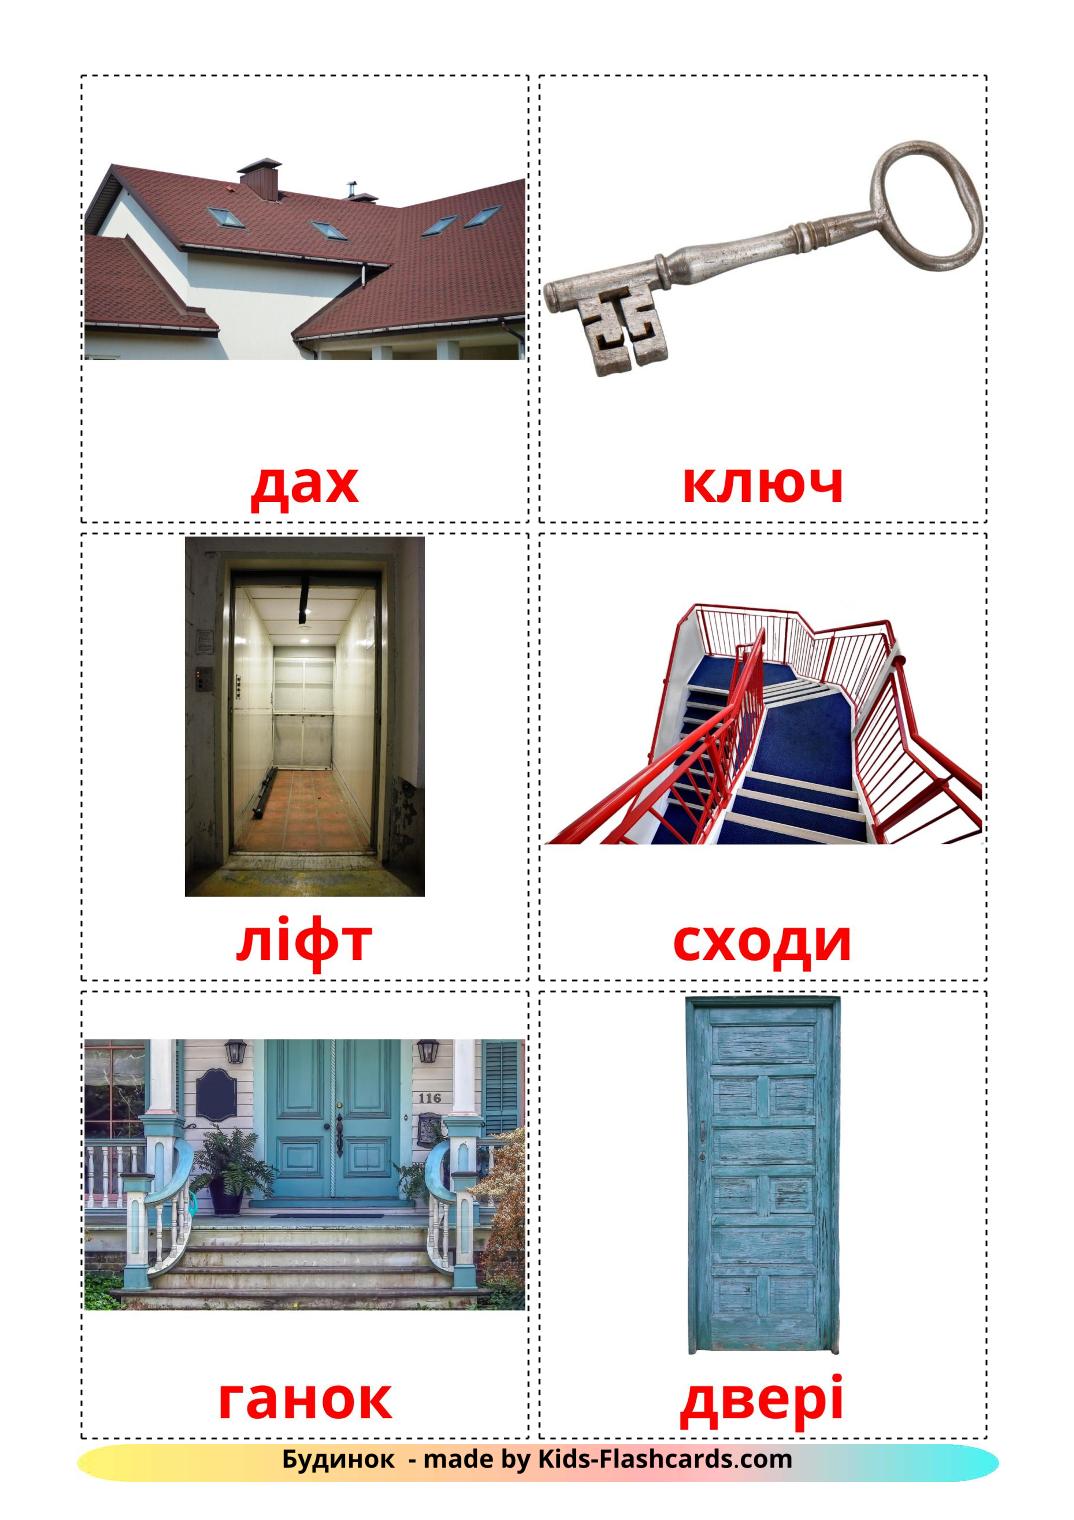 Huis - 25 gratis printbare oekraïense kaarten